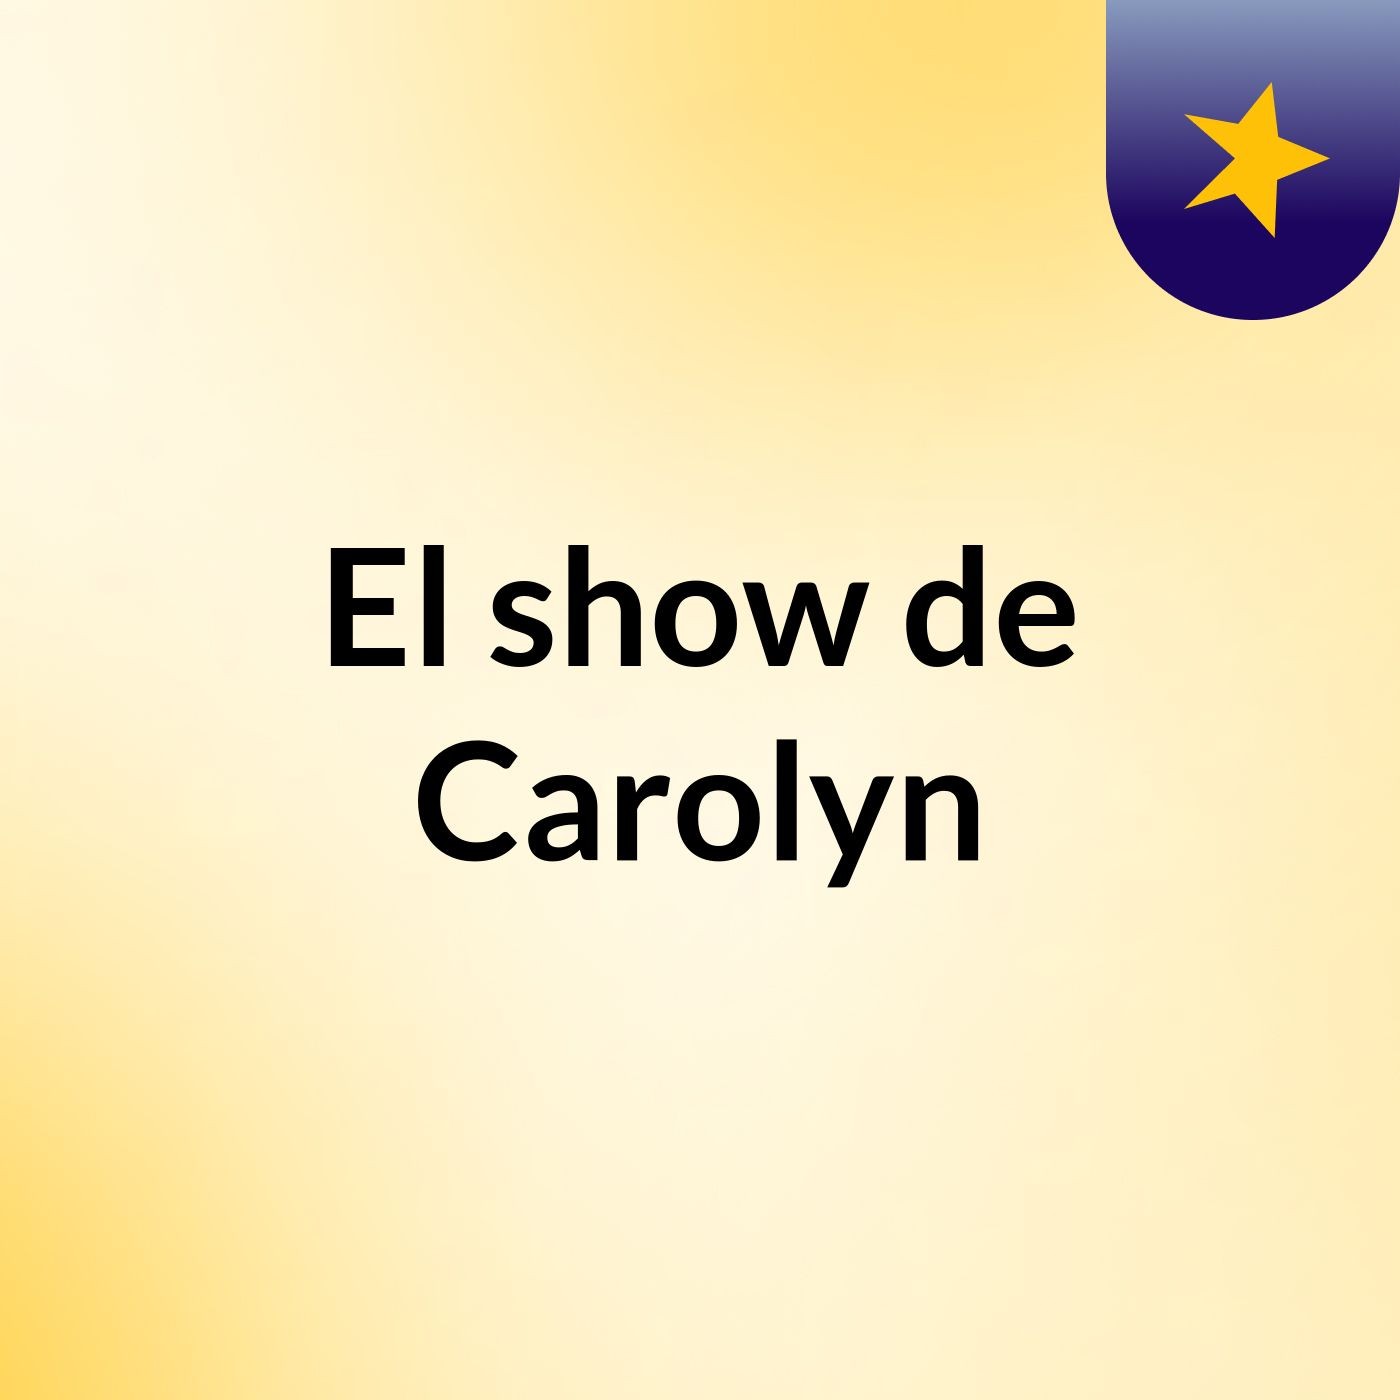 El show de Carolyn